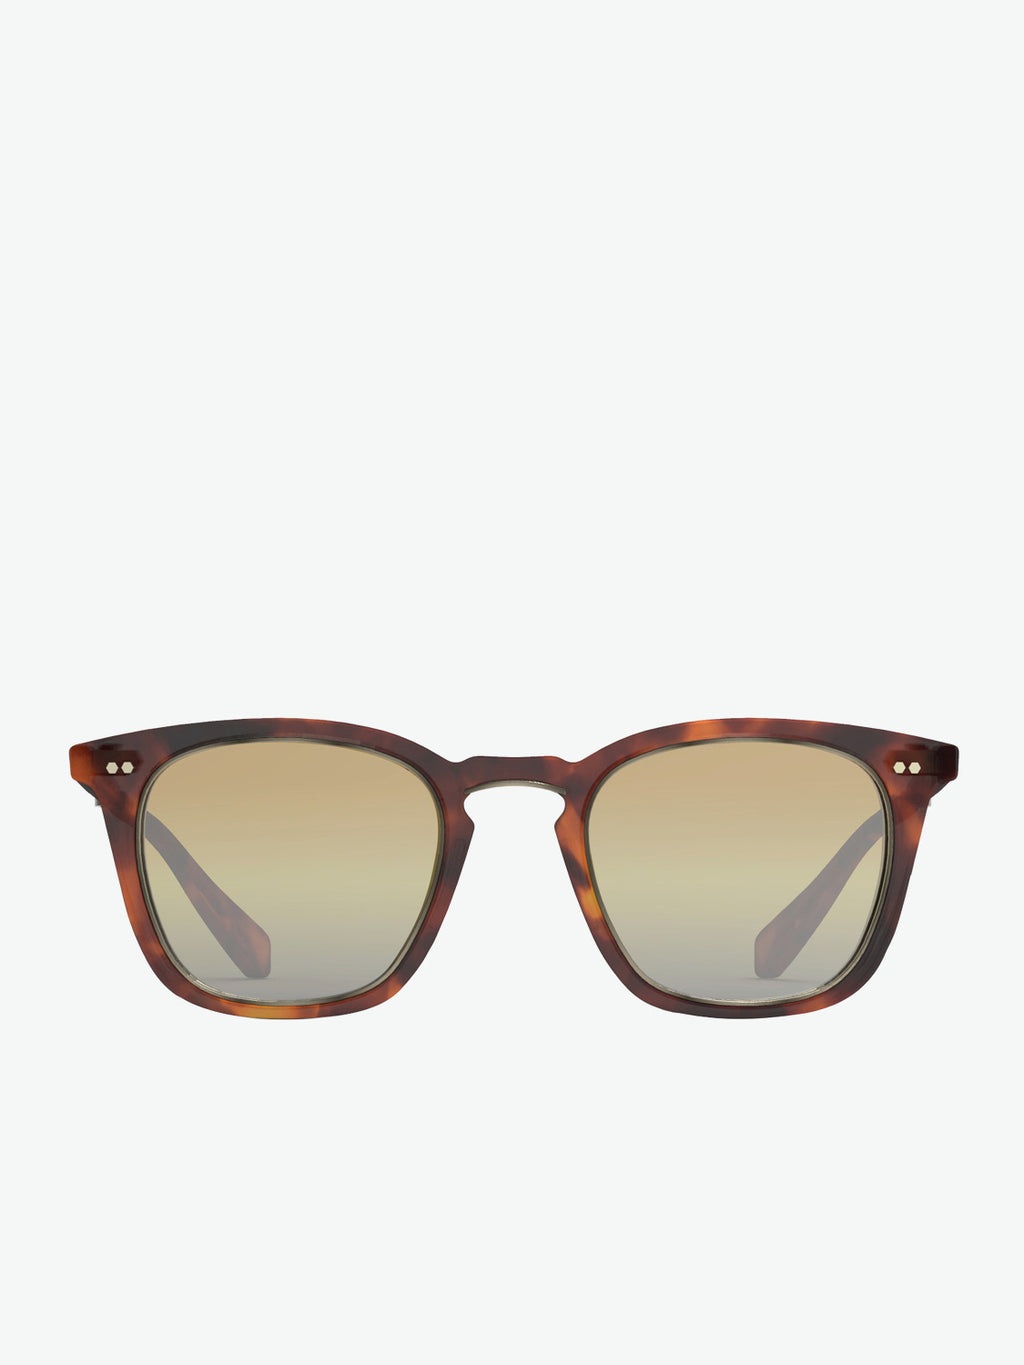 Mr. Leight Getty II S Matte Dark Copper Tortoise Sunglasses